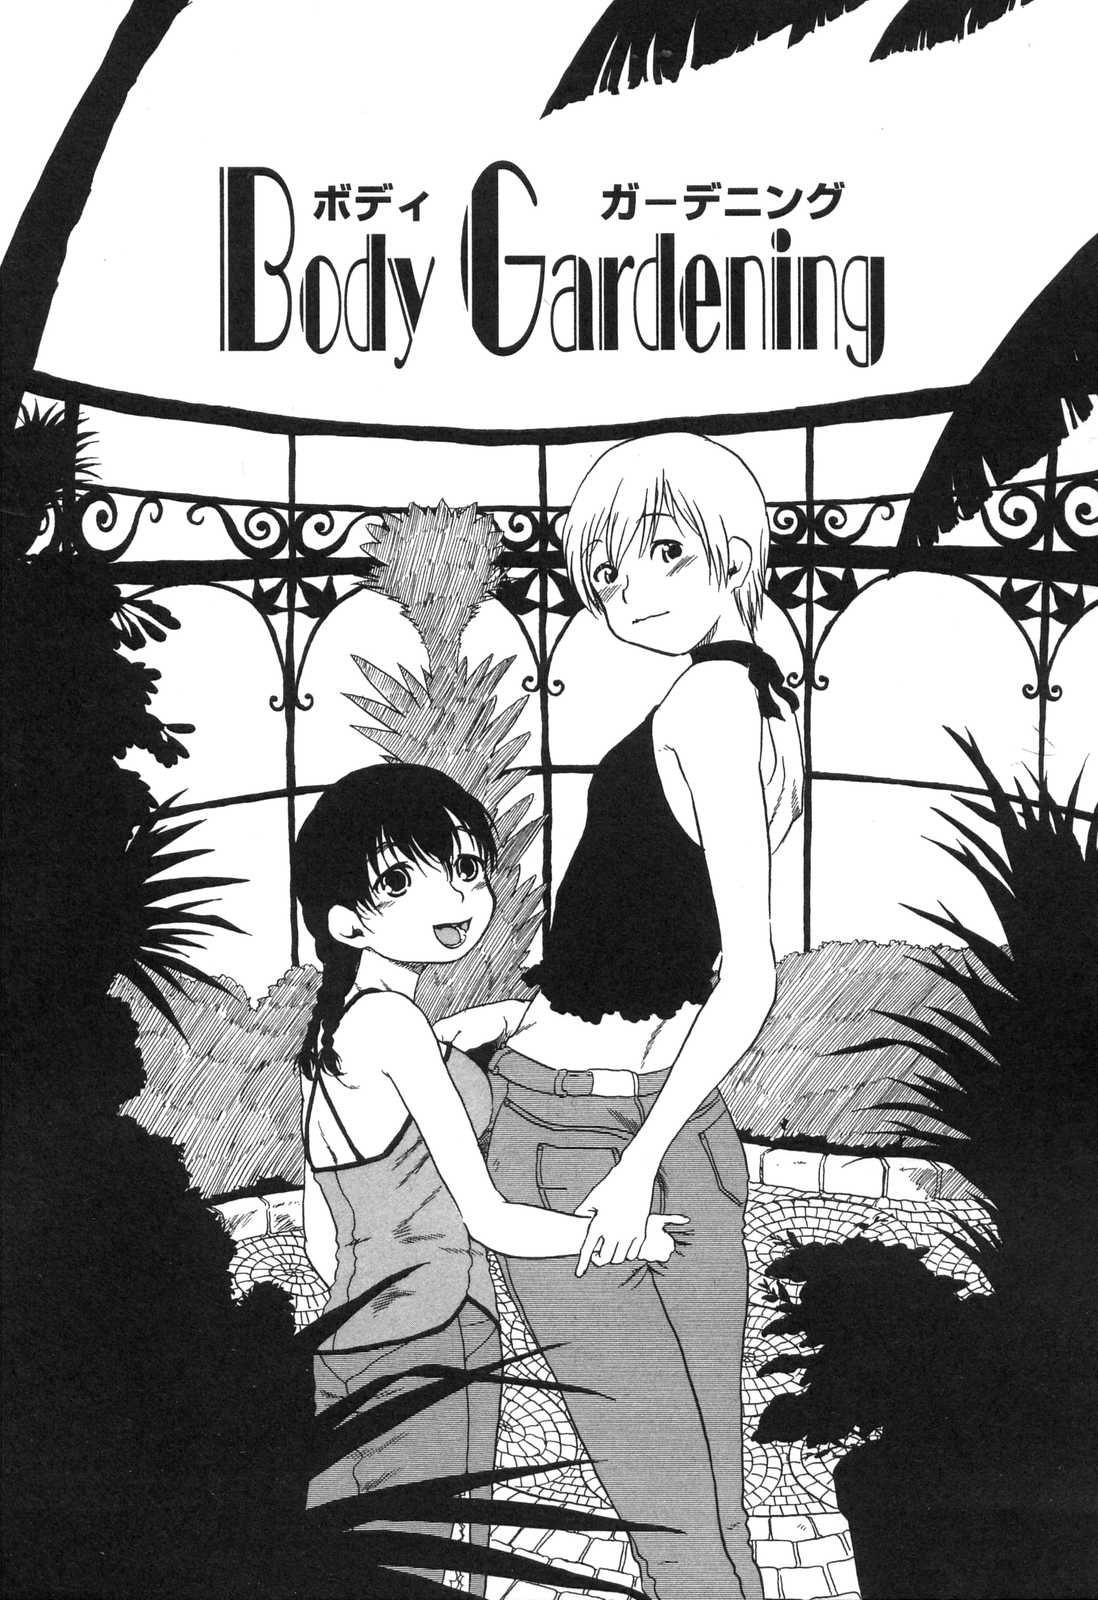 Online Body Gardening - Original Hot Women Having Sex - Picture 1